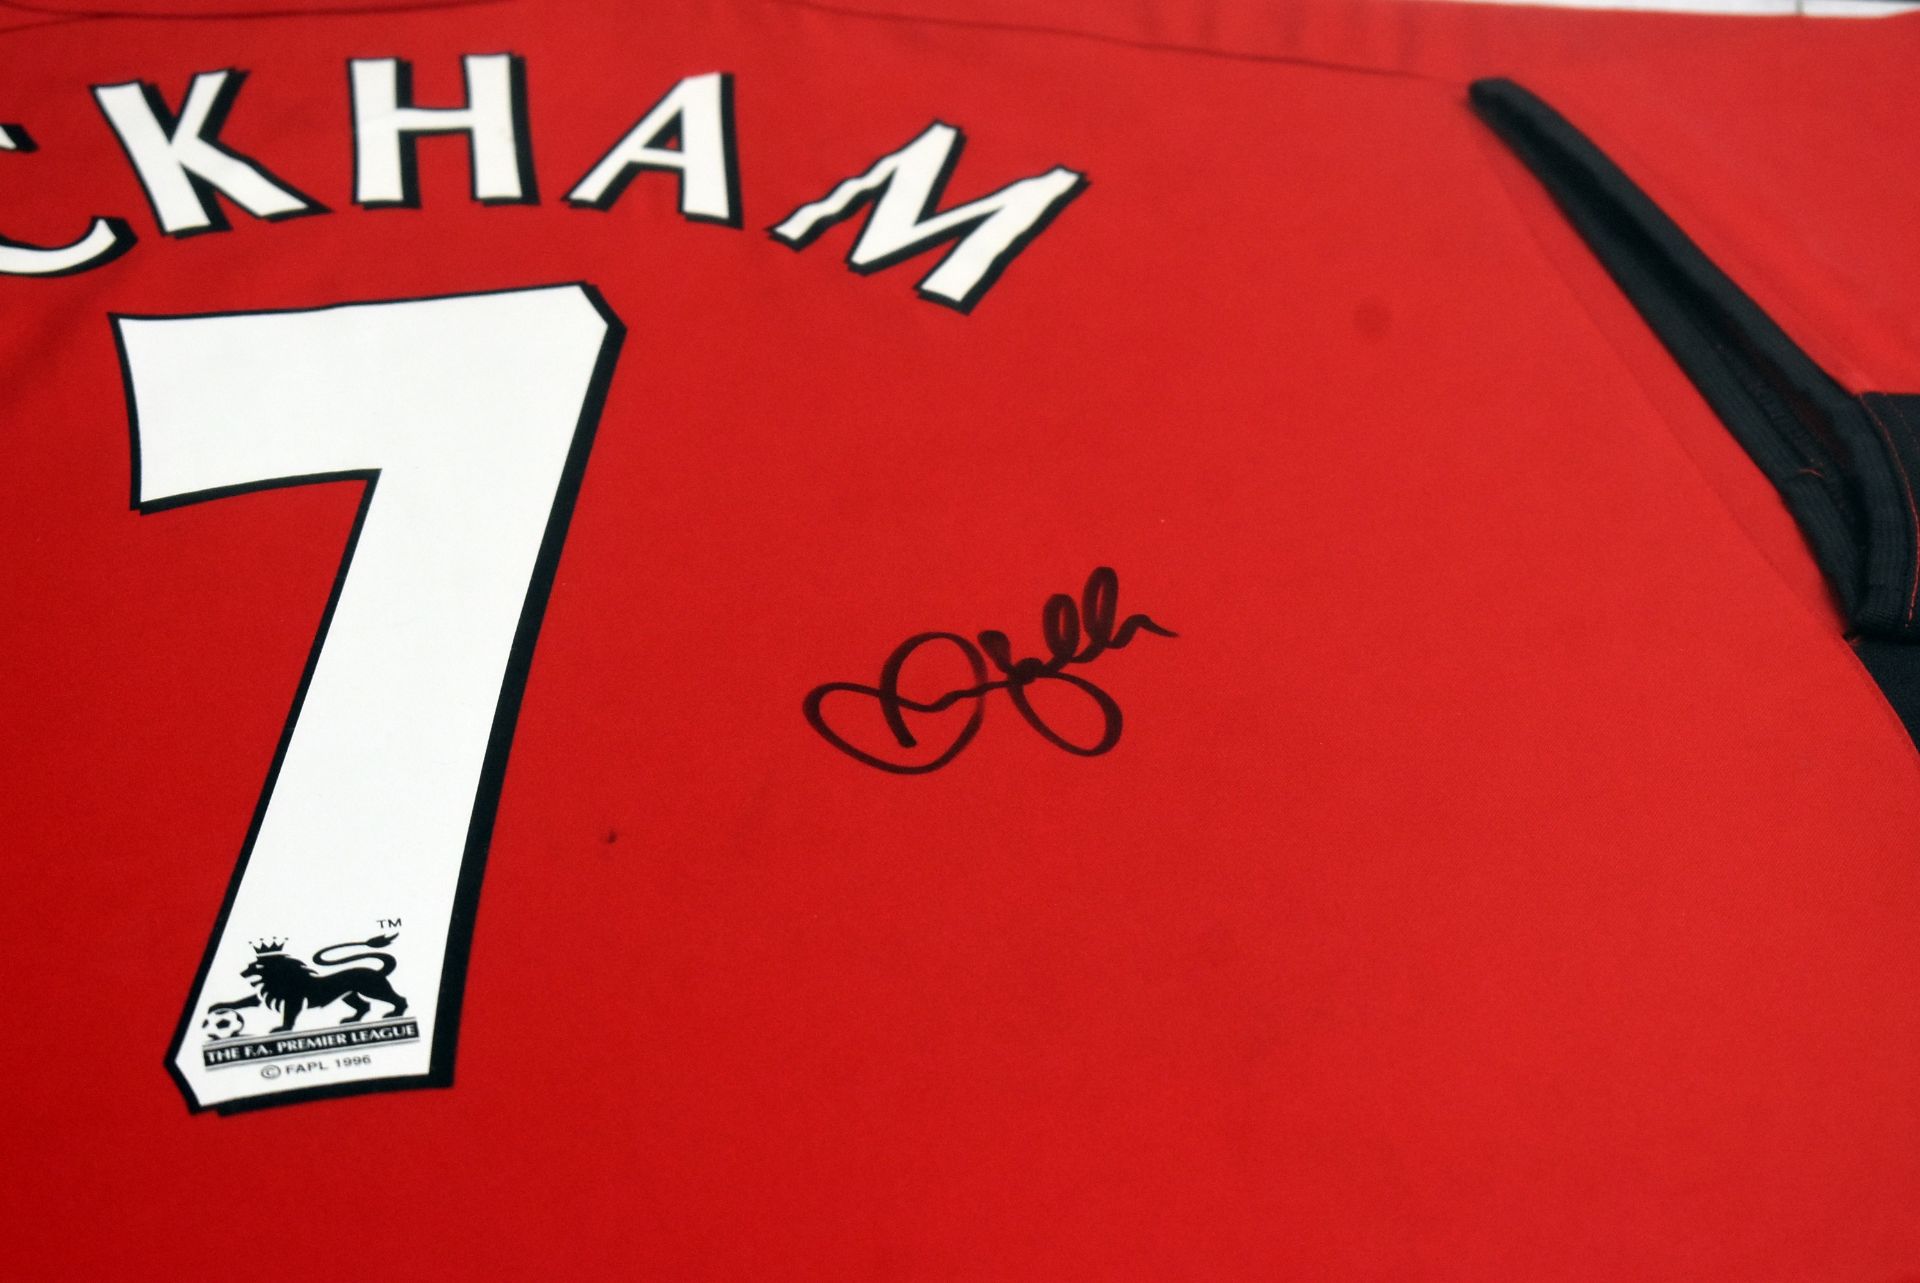 1 x Signed Autographed DAVID BECKHAM MANCHESTER UNITED Football Shirt - Image 3 of 7